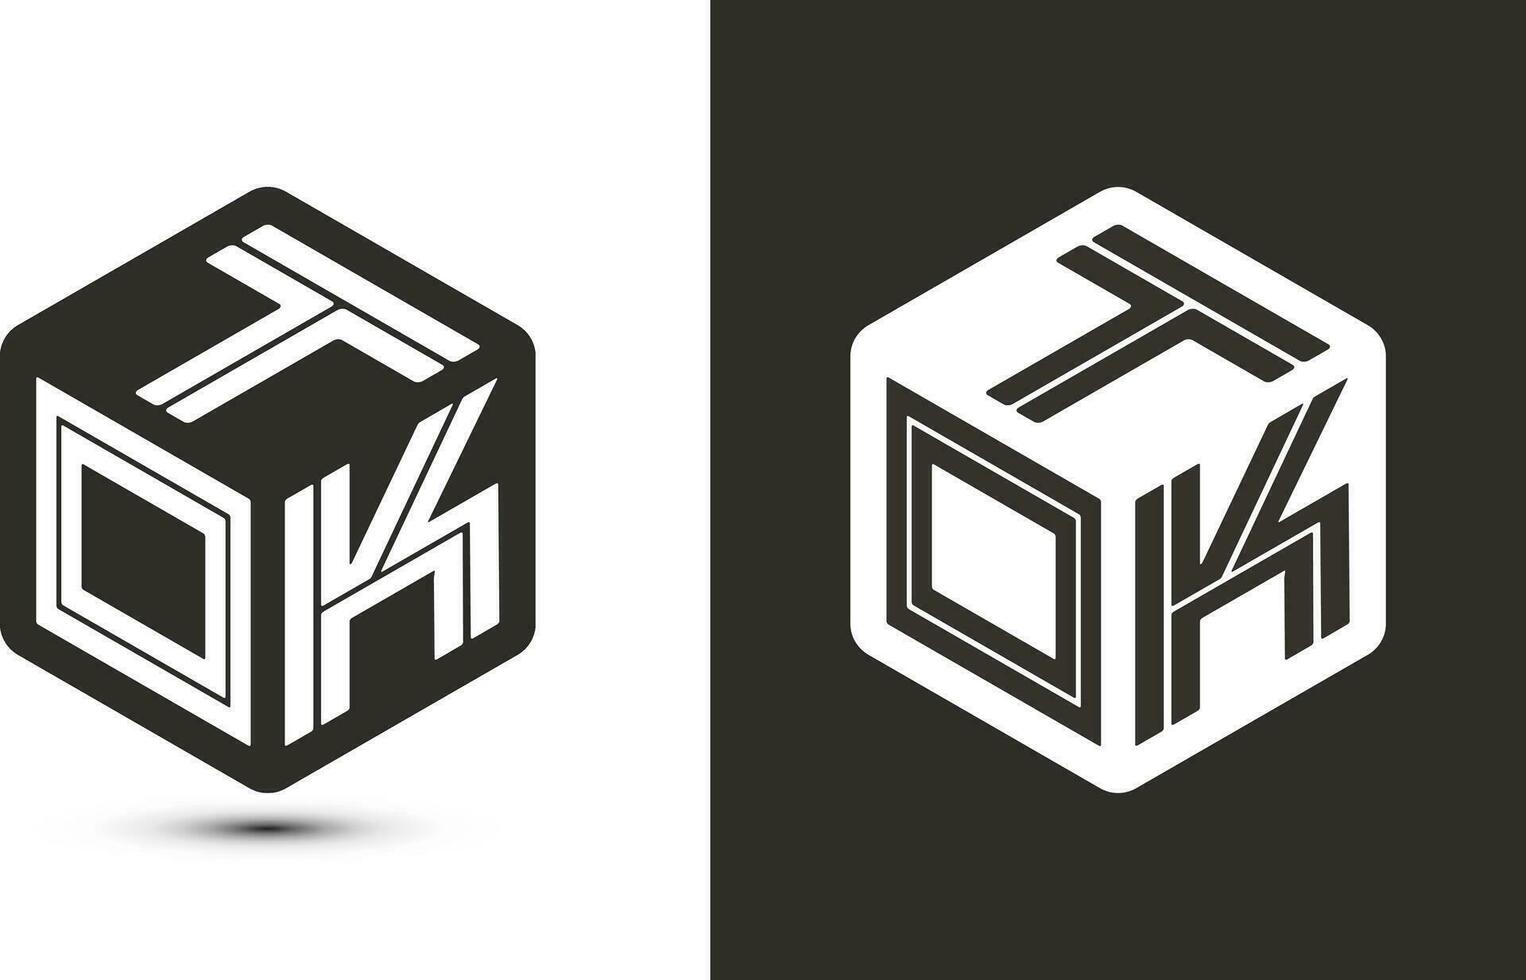 tok letra logo diseño con ilustrador cubo logo, vector logo moderno alfabeto fuente superposición estilo.